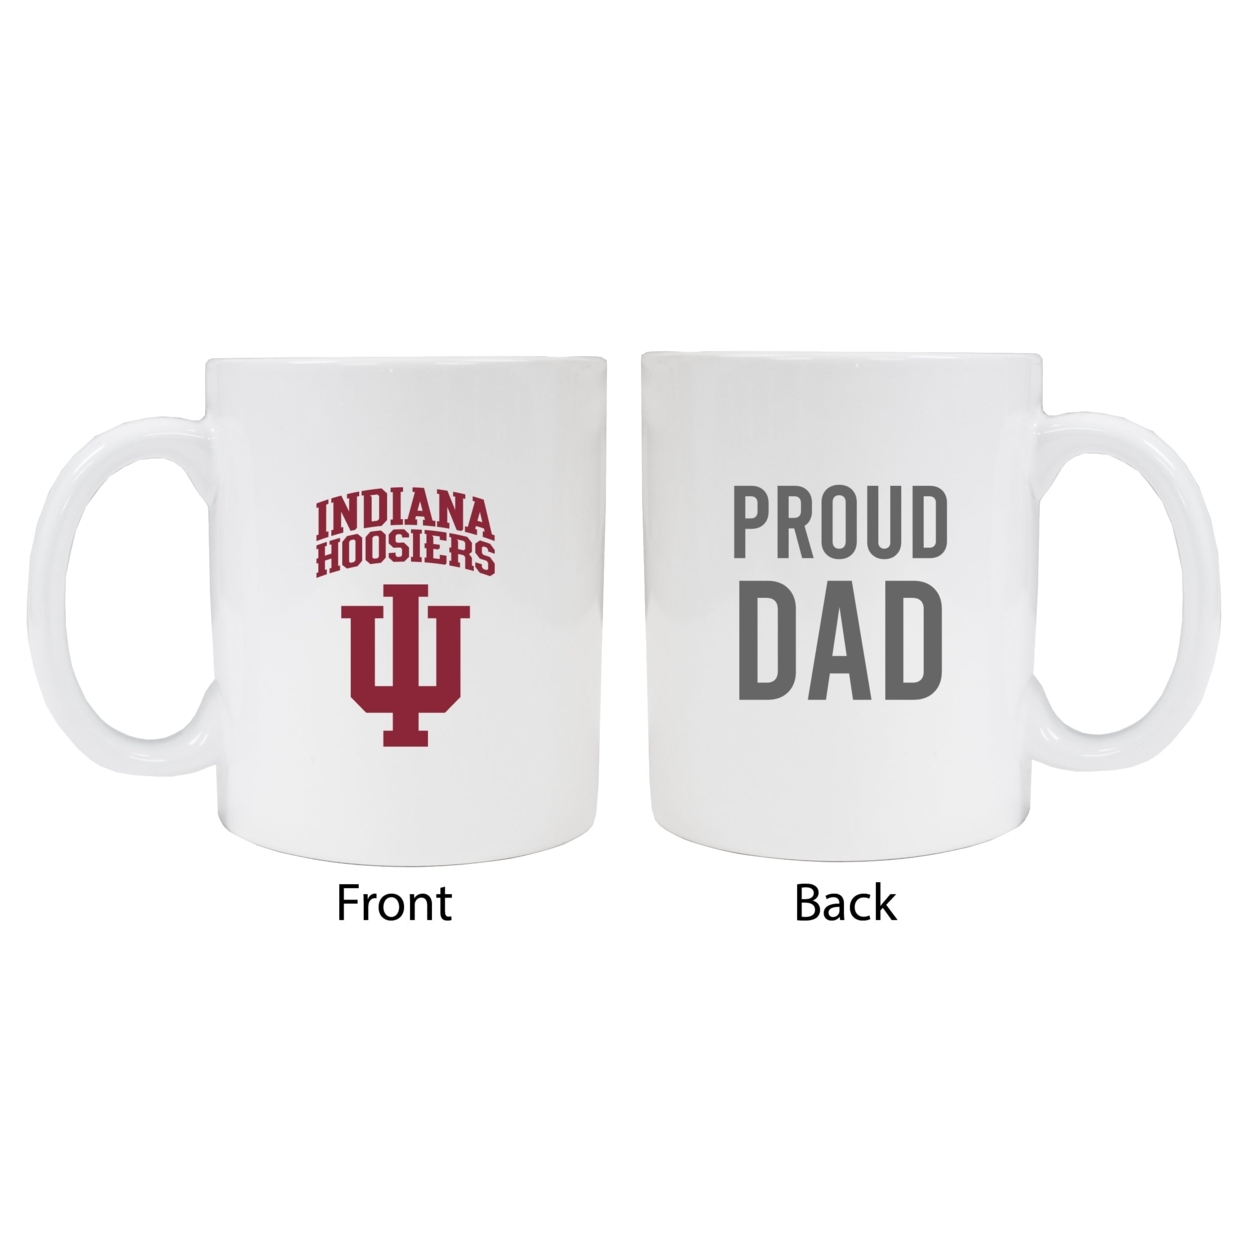 Indiana Hoosiers Proud Dad Ceramic Coffee Mug - White